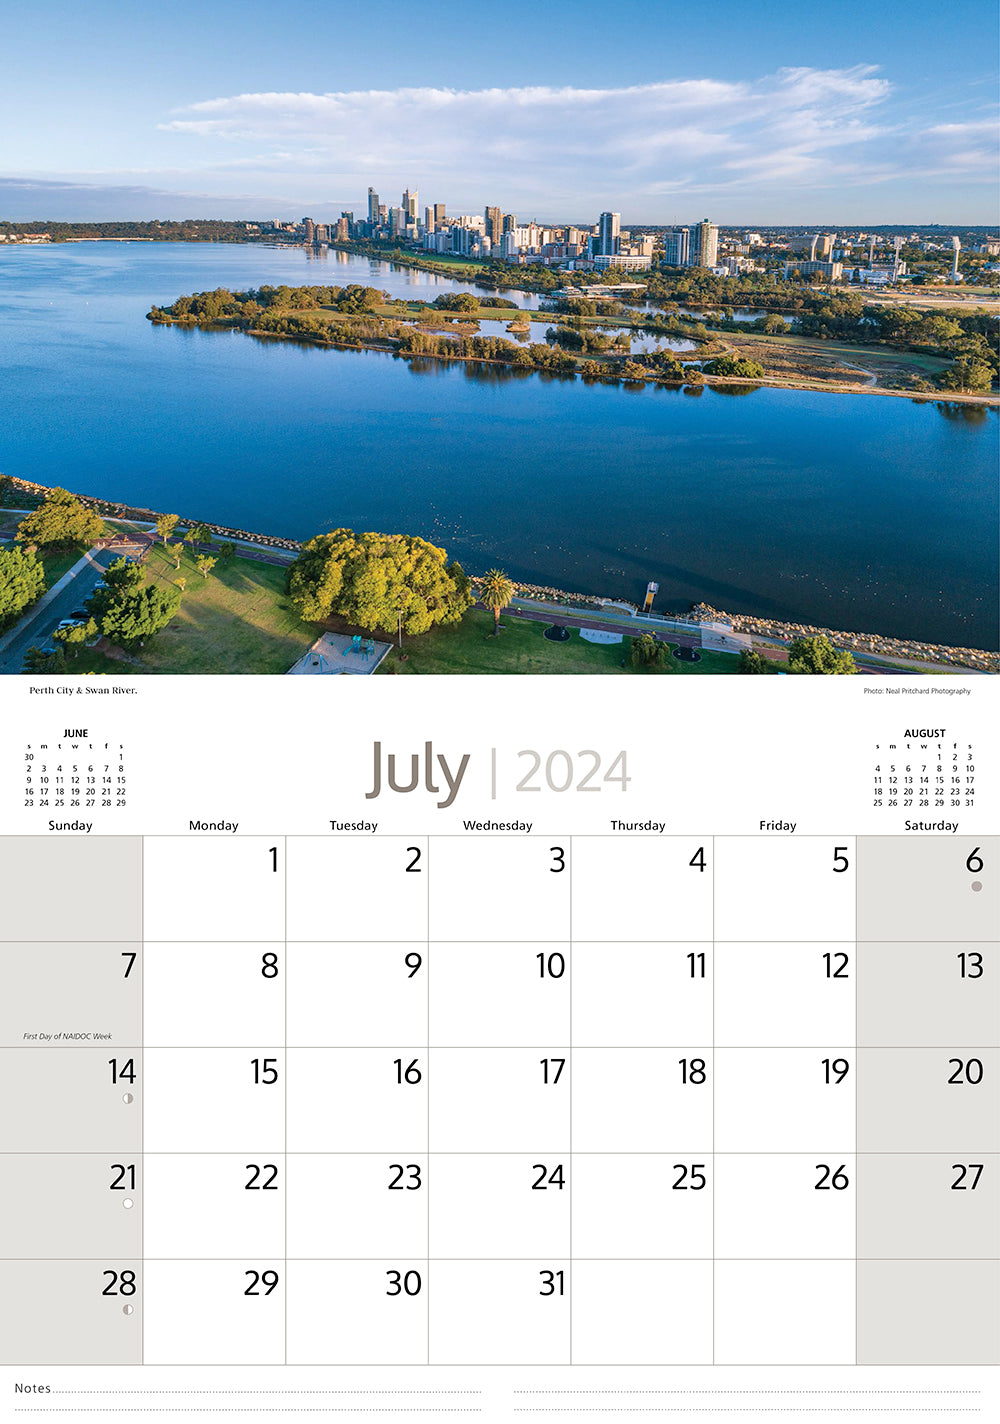 2025 Around Perth By Artique - Horizontal Wall Calendar